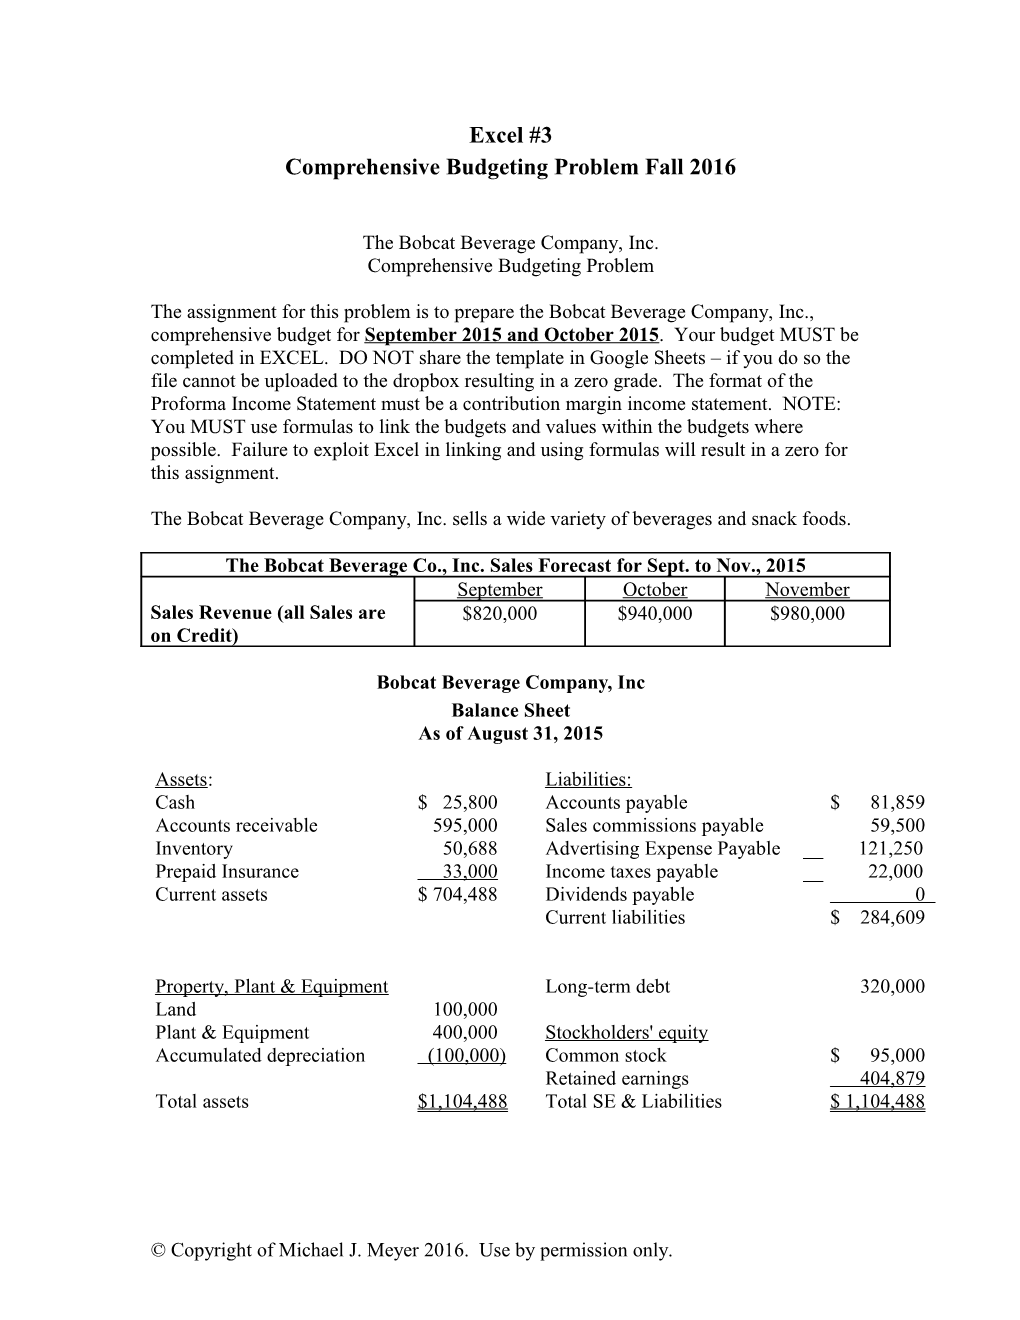 Comprehensive Budgeting Problem Fall 2005